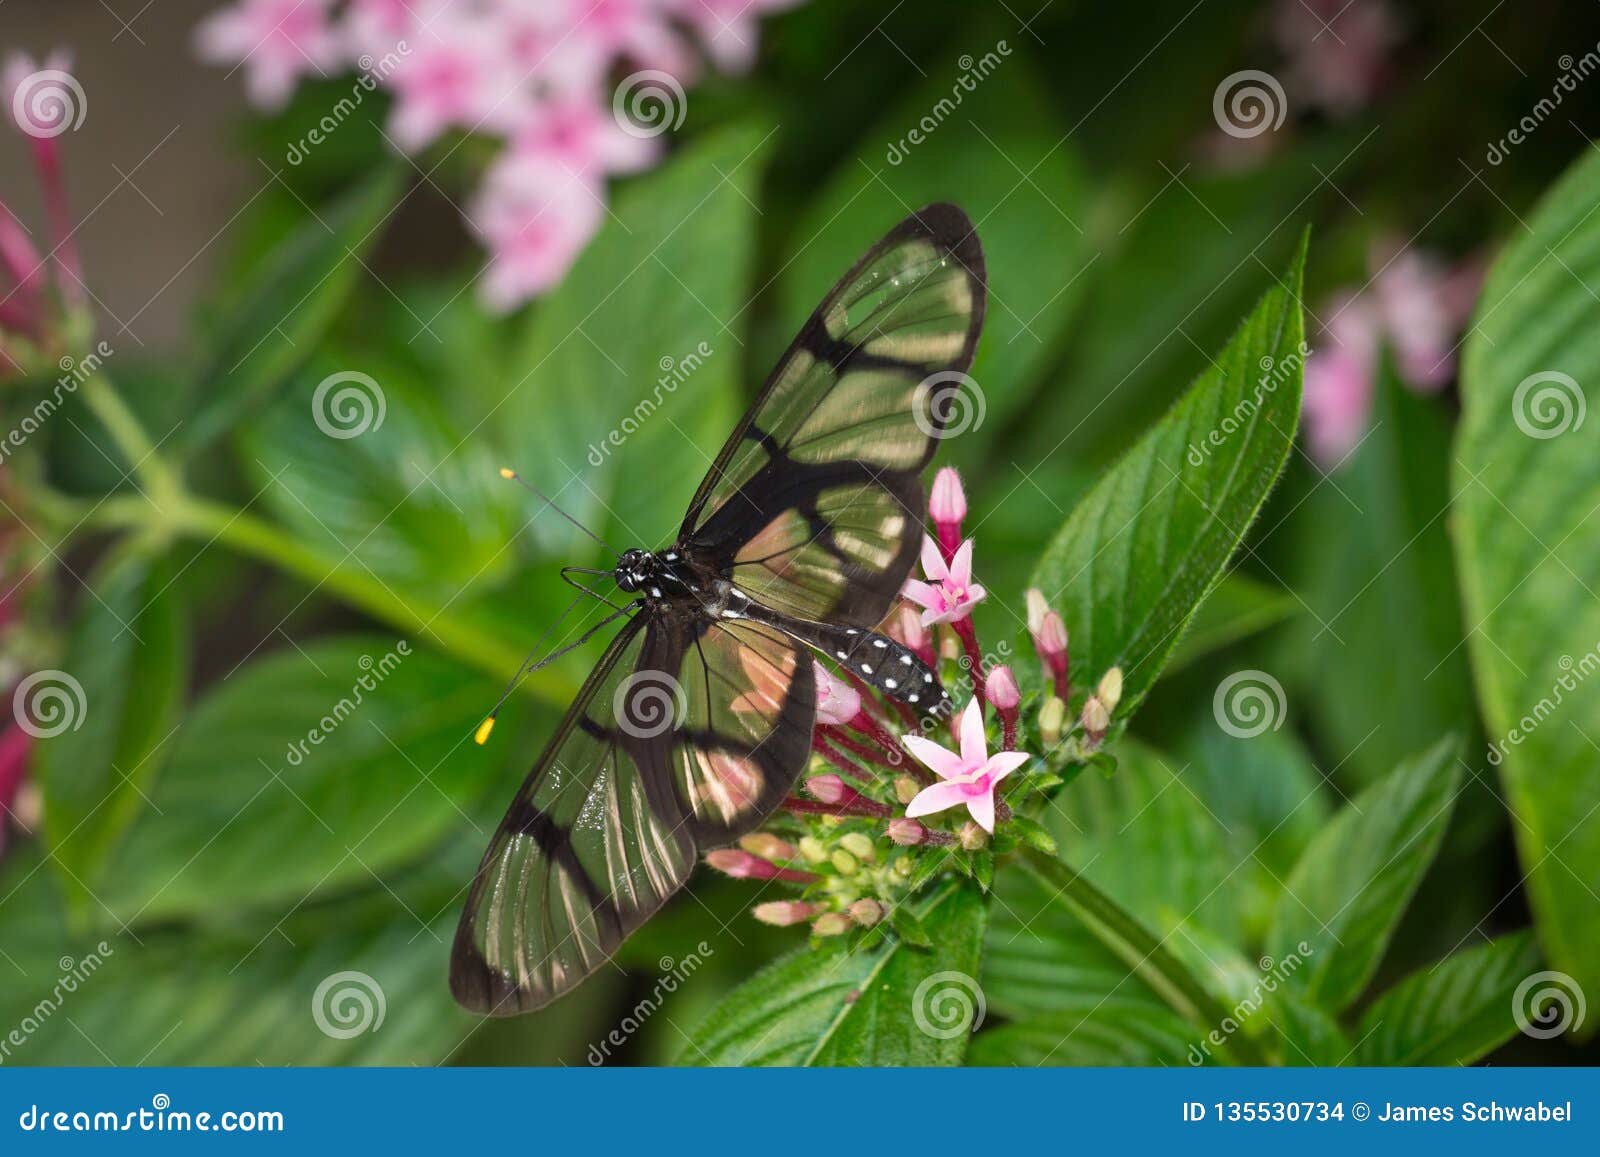 close up of glasswing butterfly, greta oto